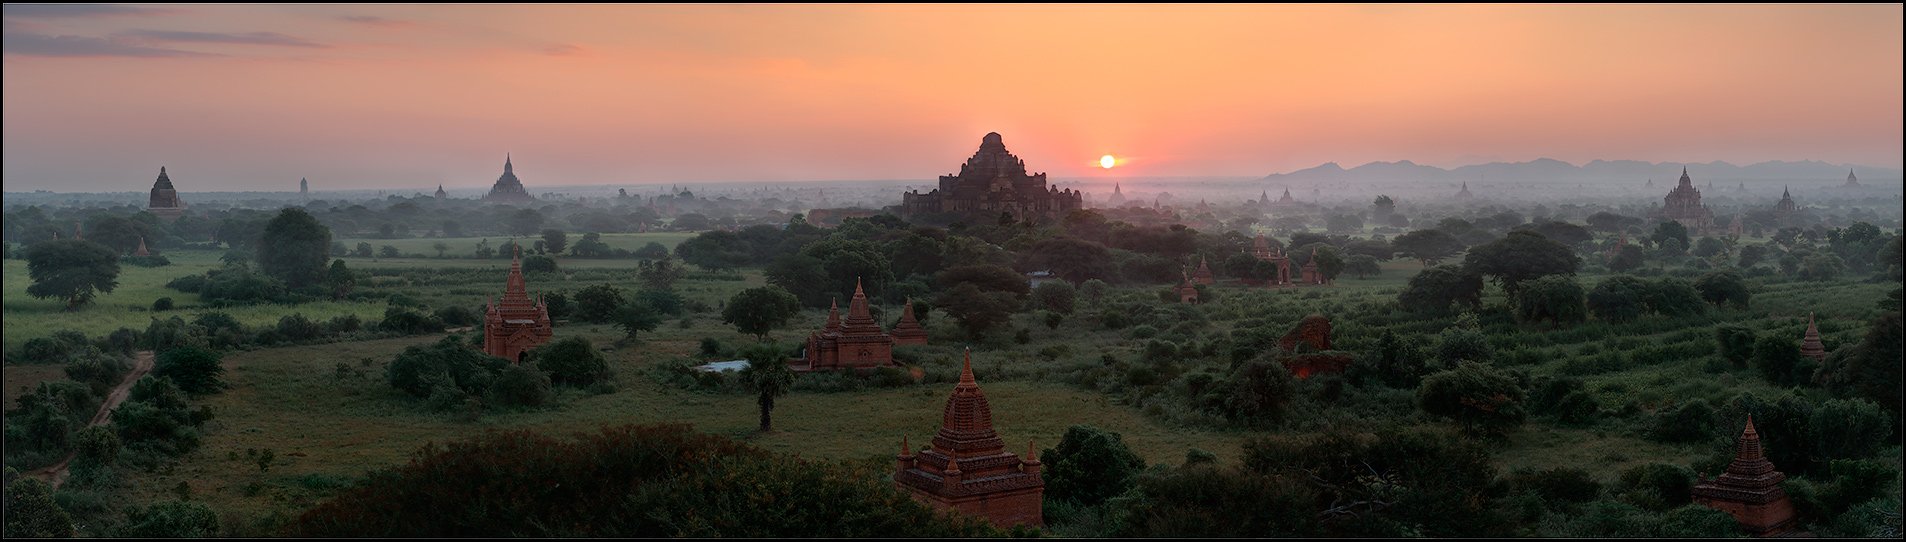 баган, мьянма, панорама, восход, Yury Pustovoy